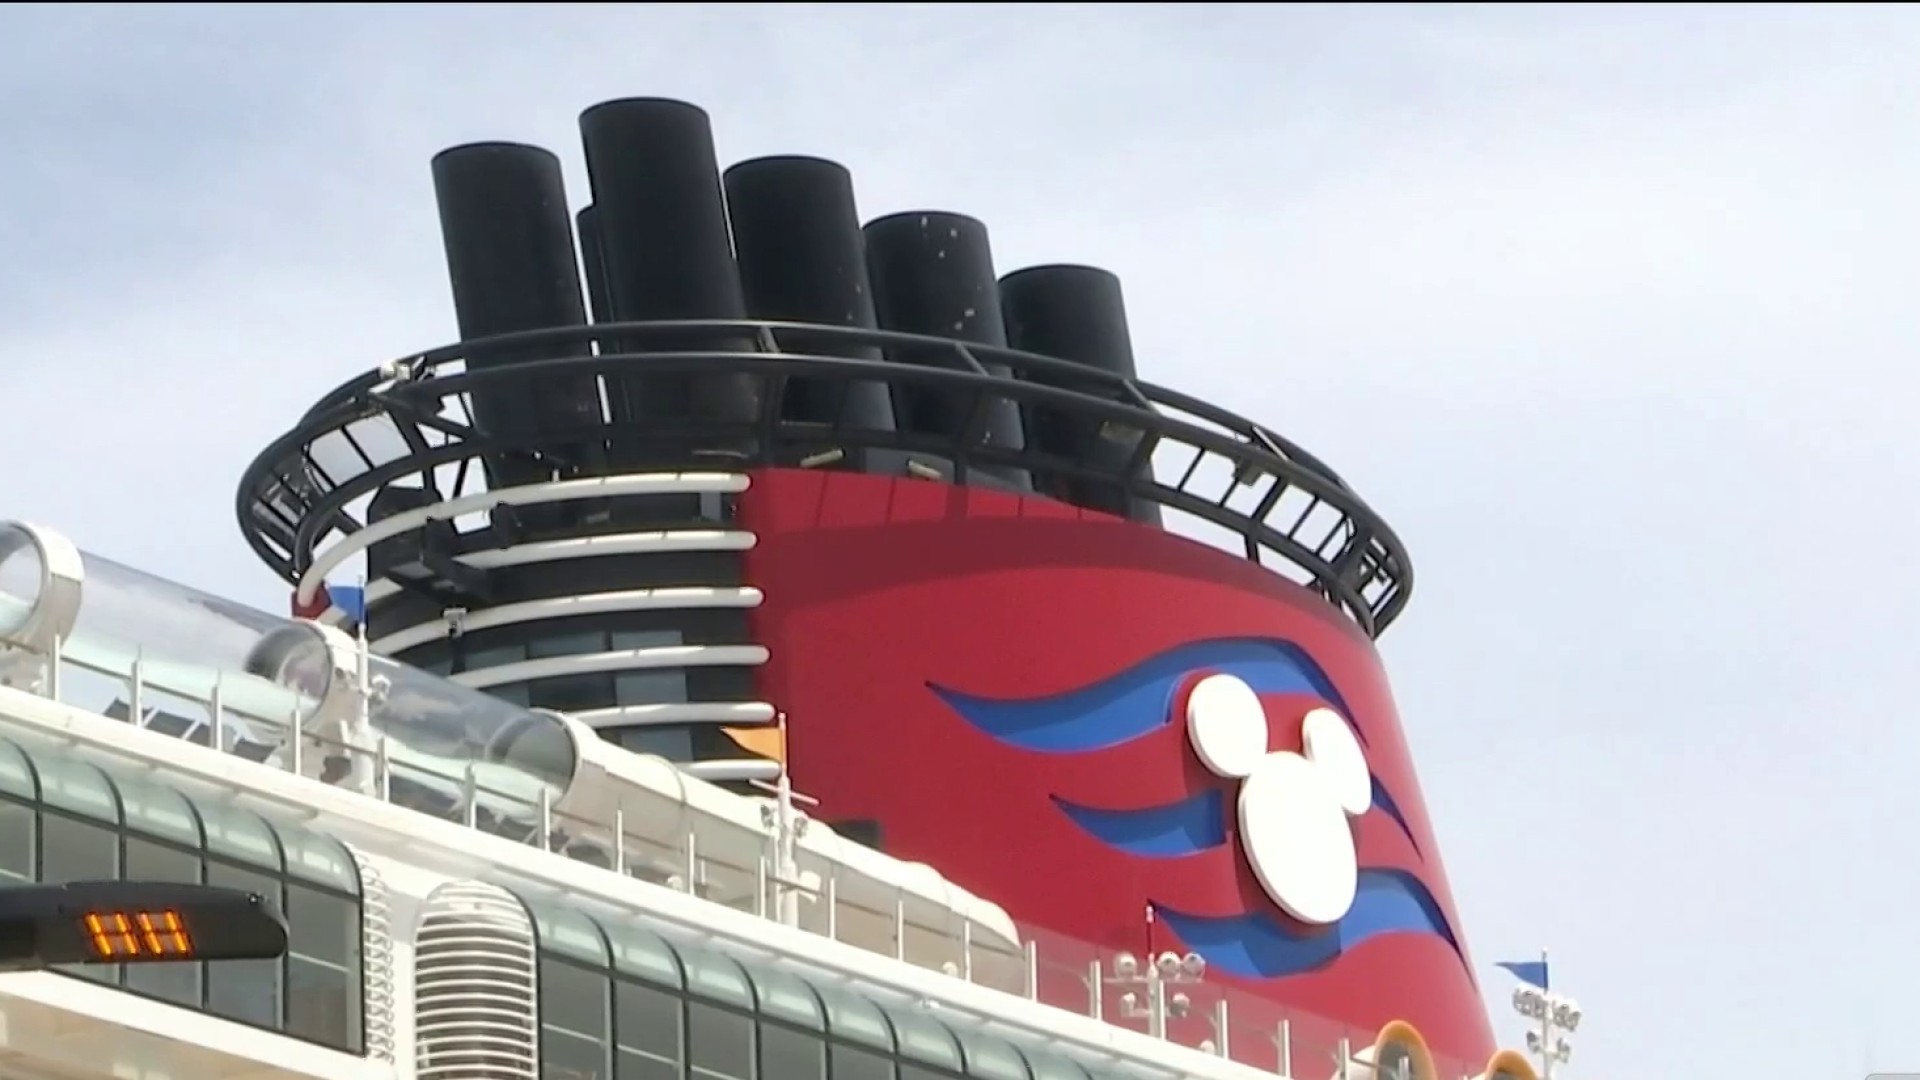 disney fantasy cruise logo